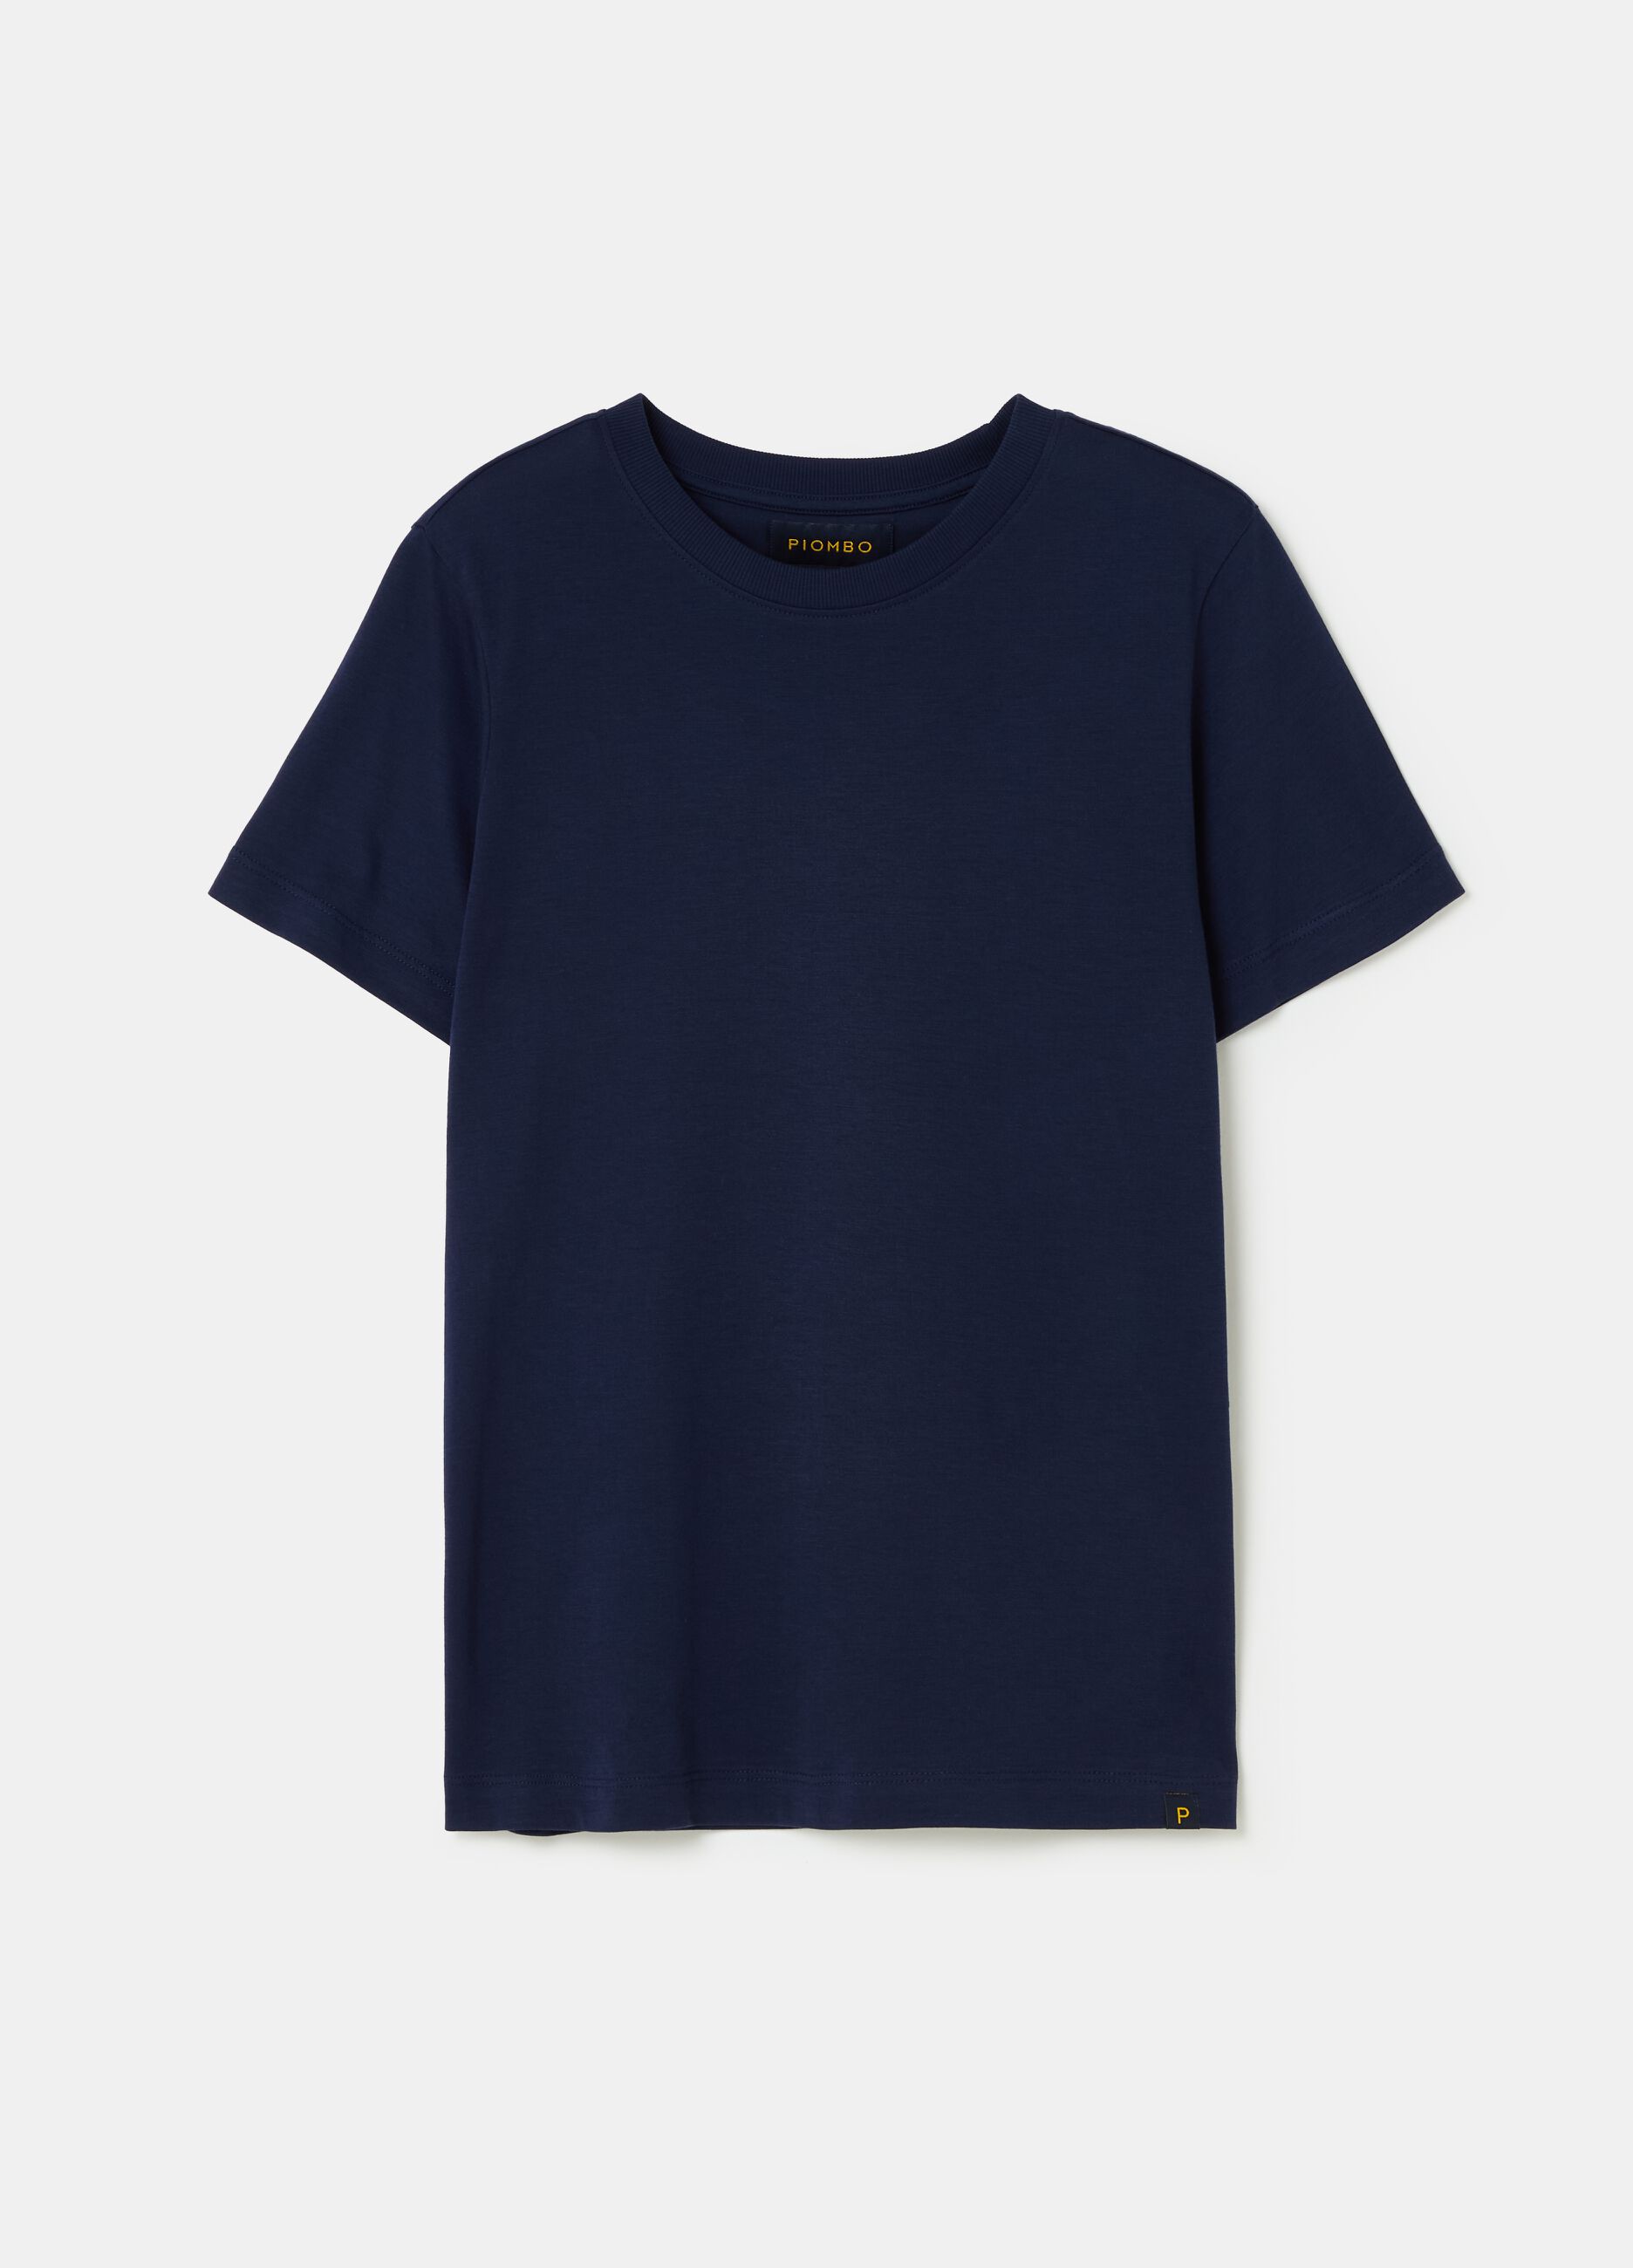 Supima cotton T-shirt with round neck